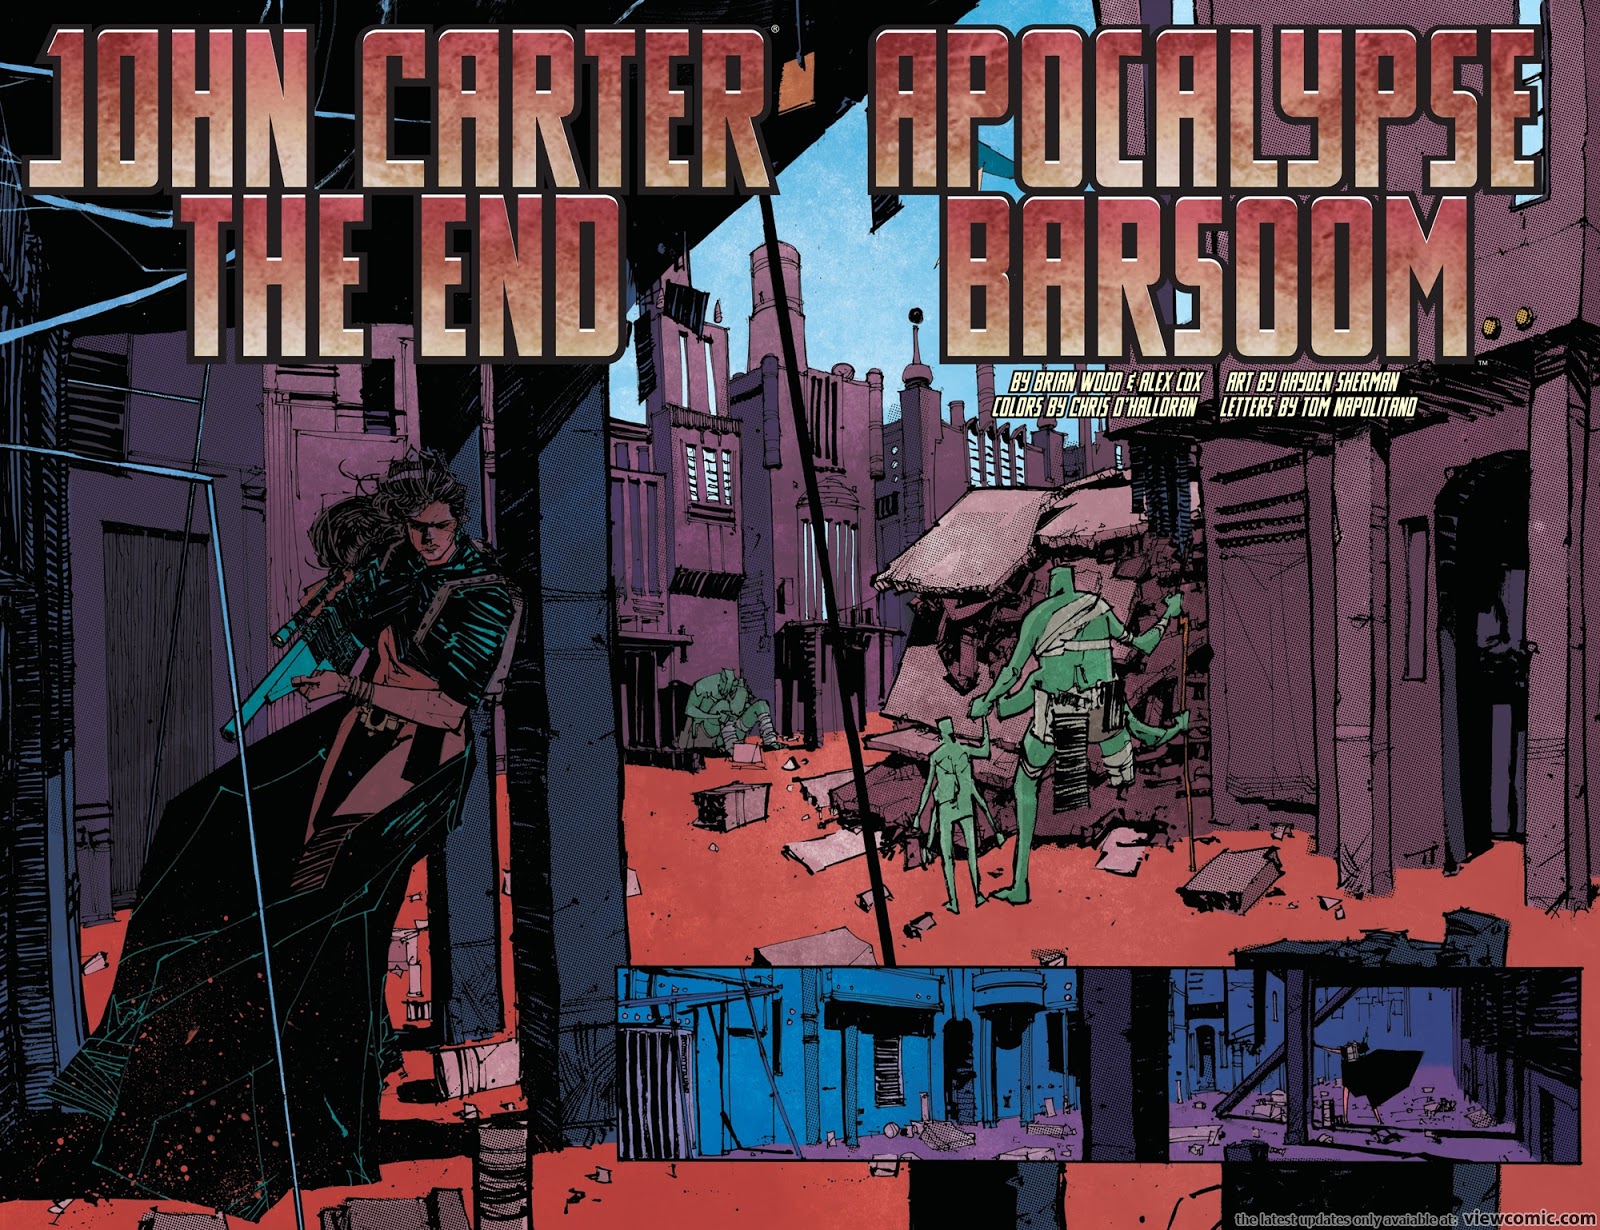 John Carter The End 002 2017 | Read John Carter The End 002 2017 comic ...